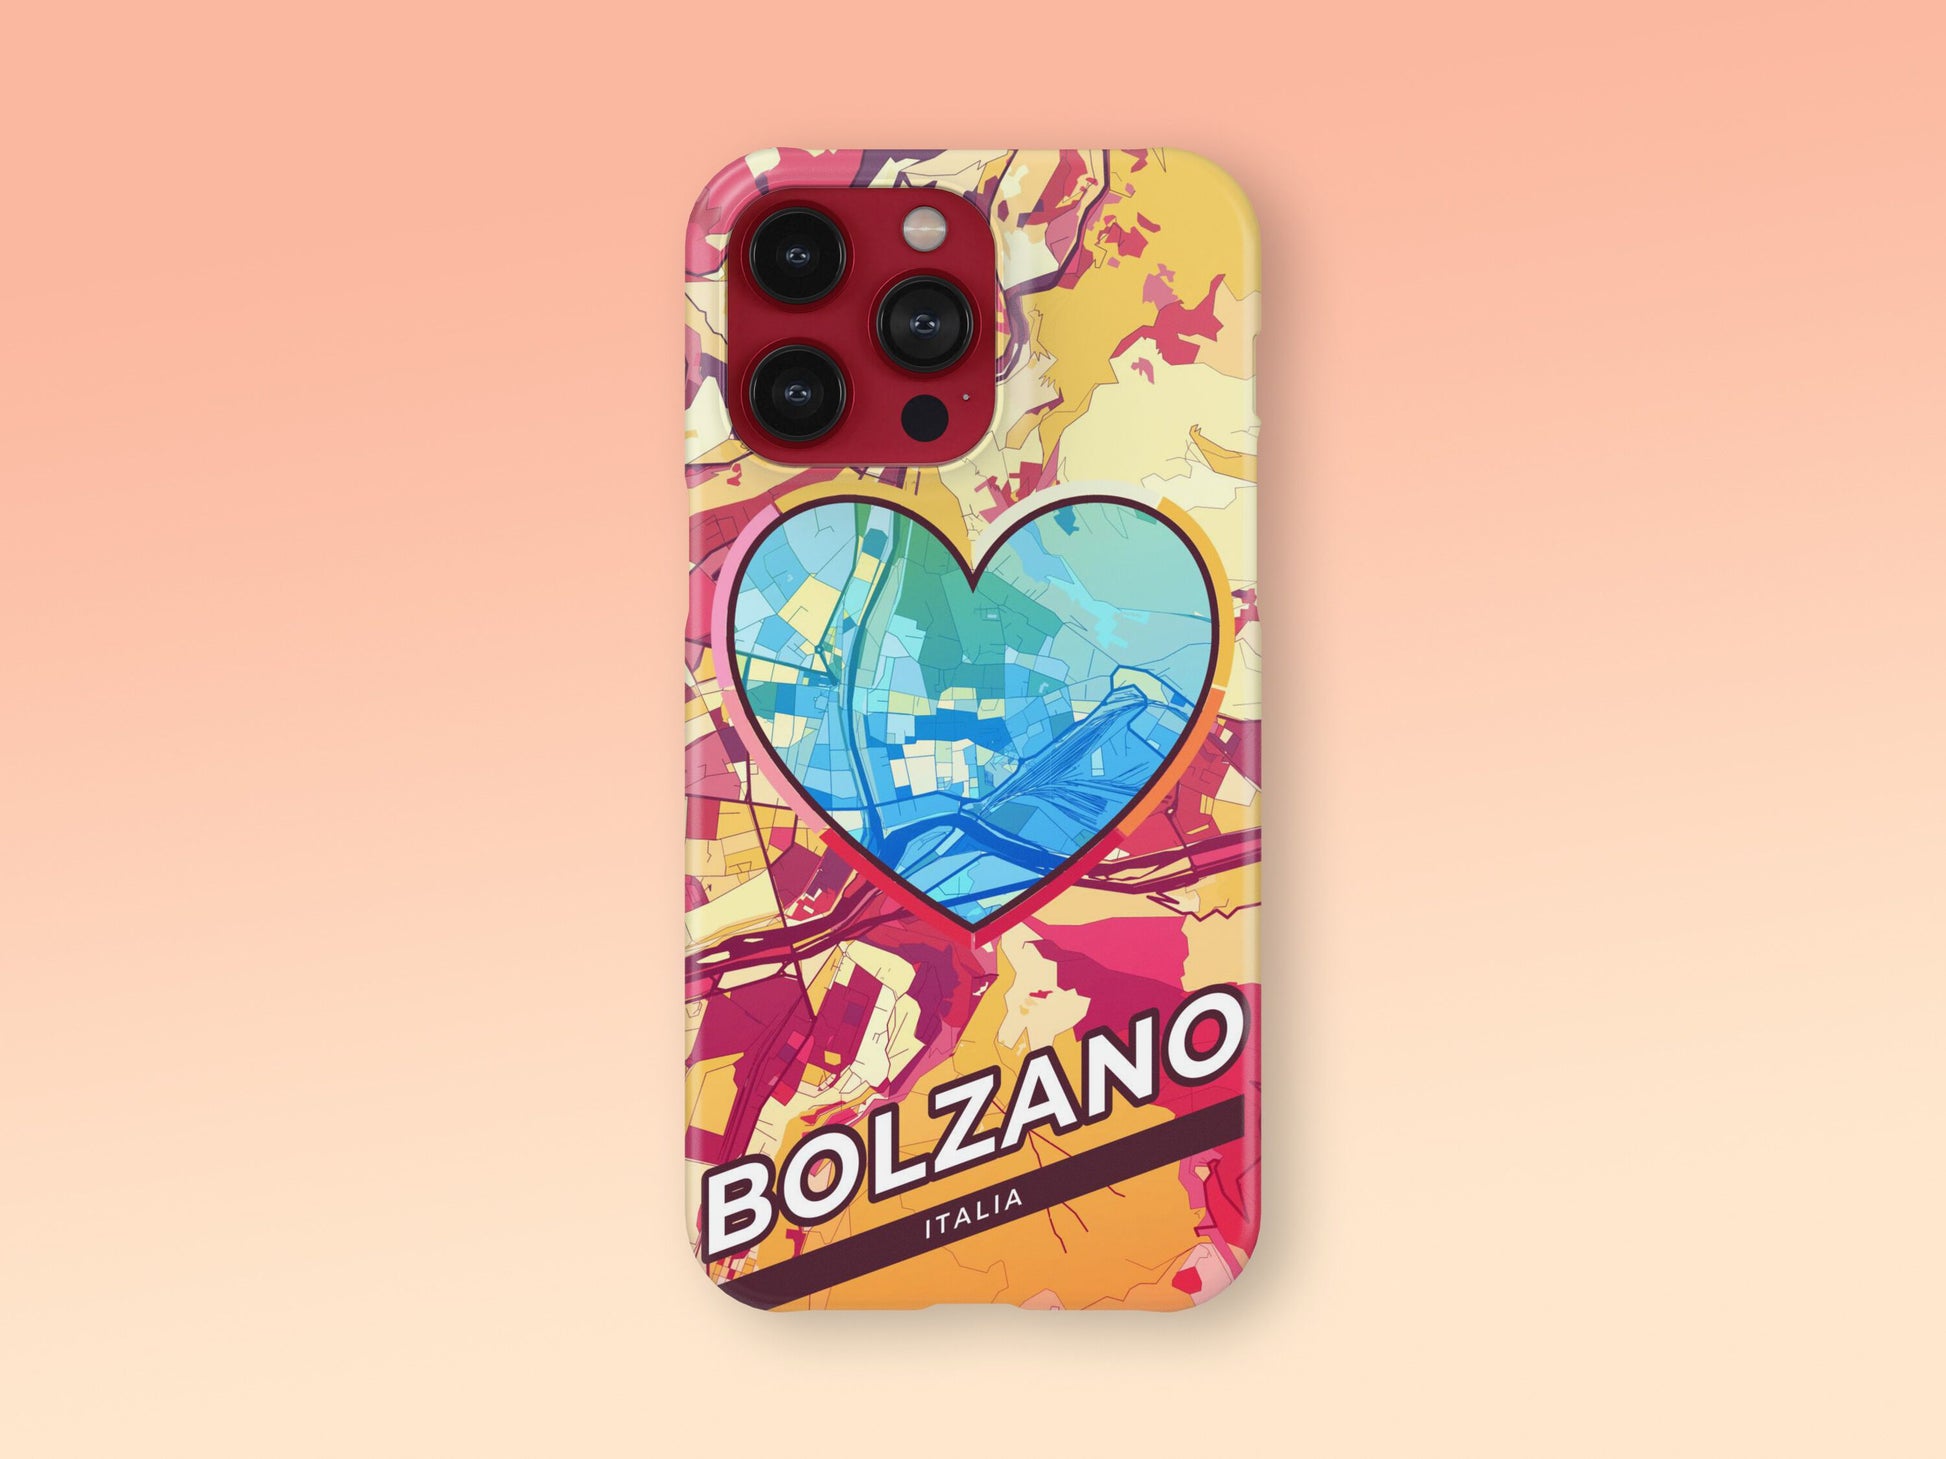 Bolzano Italy slim phone case with colorful icon. Birthday, wedding or housewarming gift. Couple match cases. 2